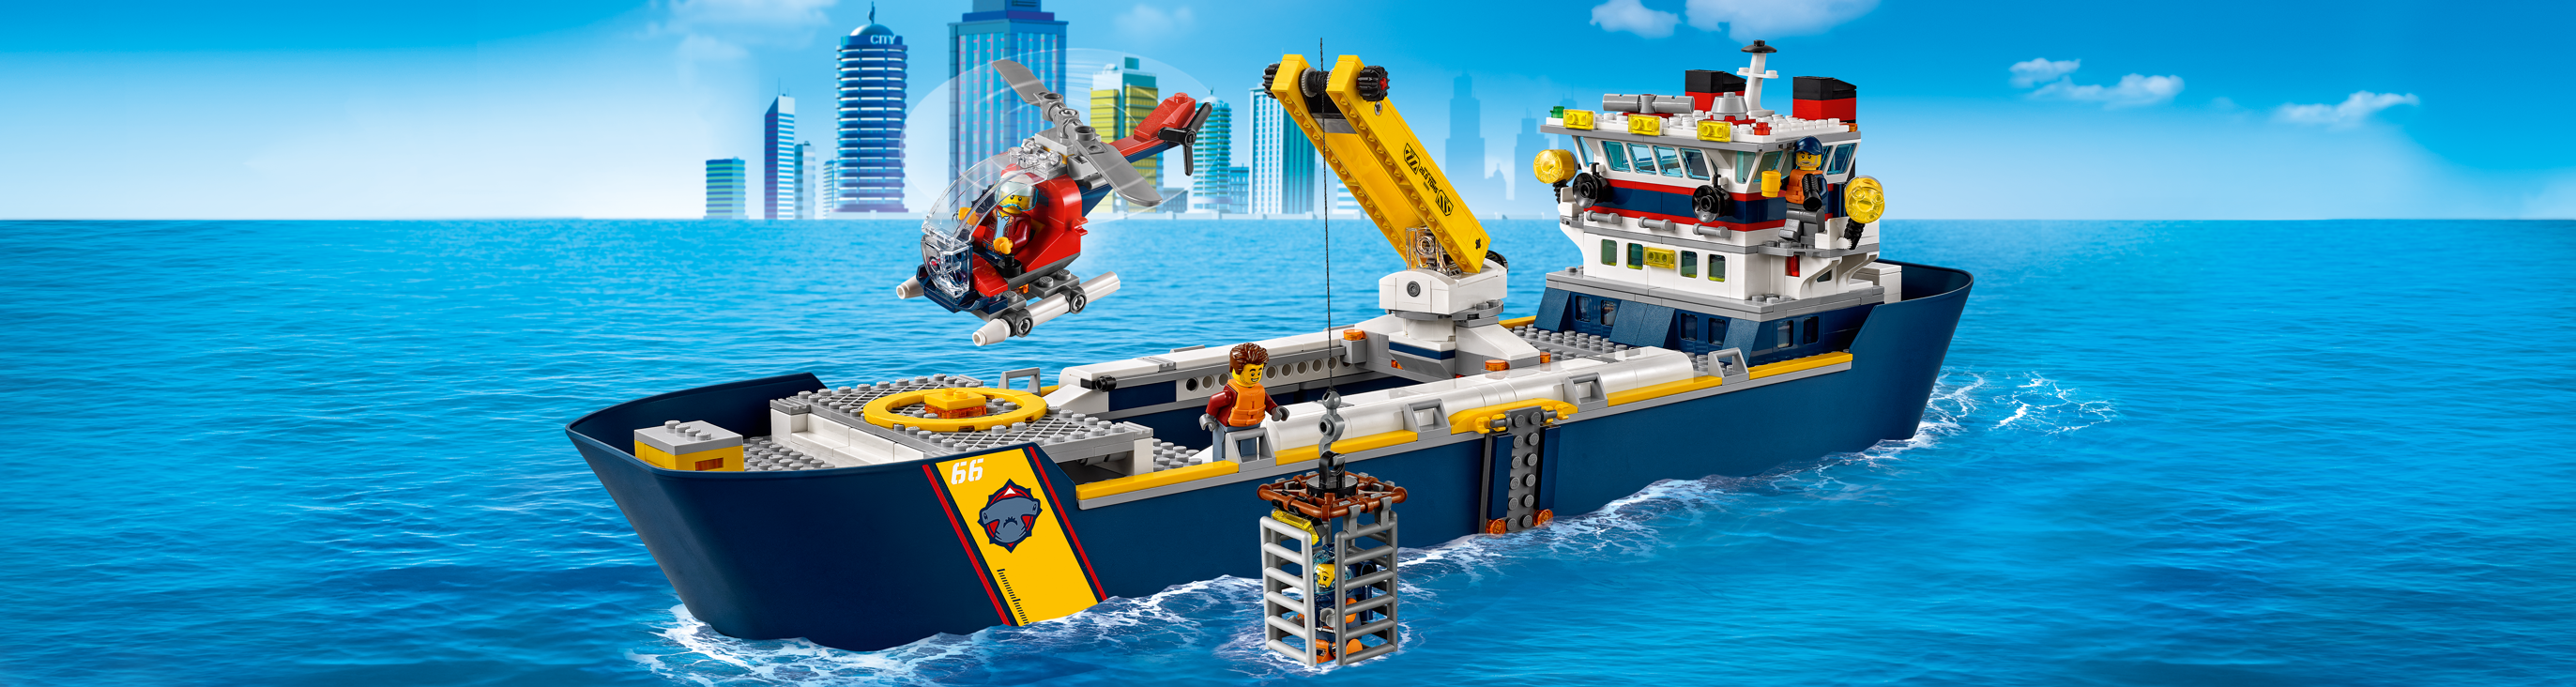 Lego City Build Fun Stuff With Lego Bricks - fastest boats on build a boat for treasure roblox